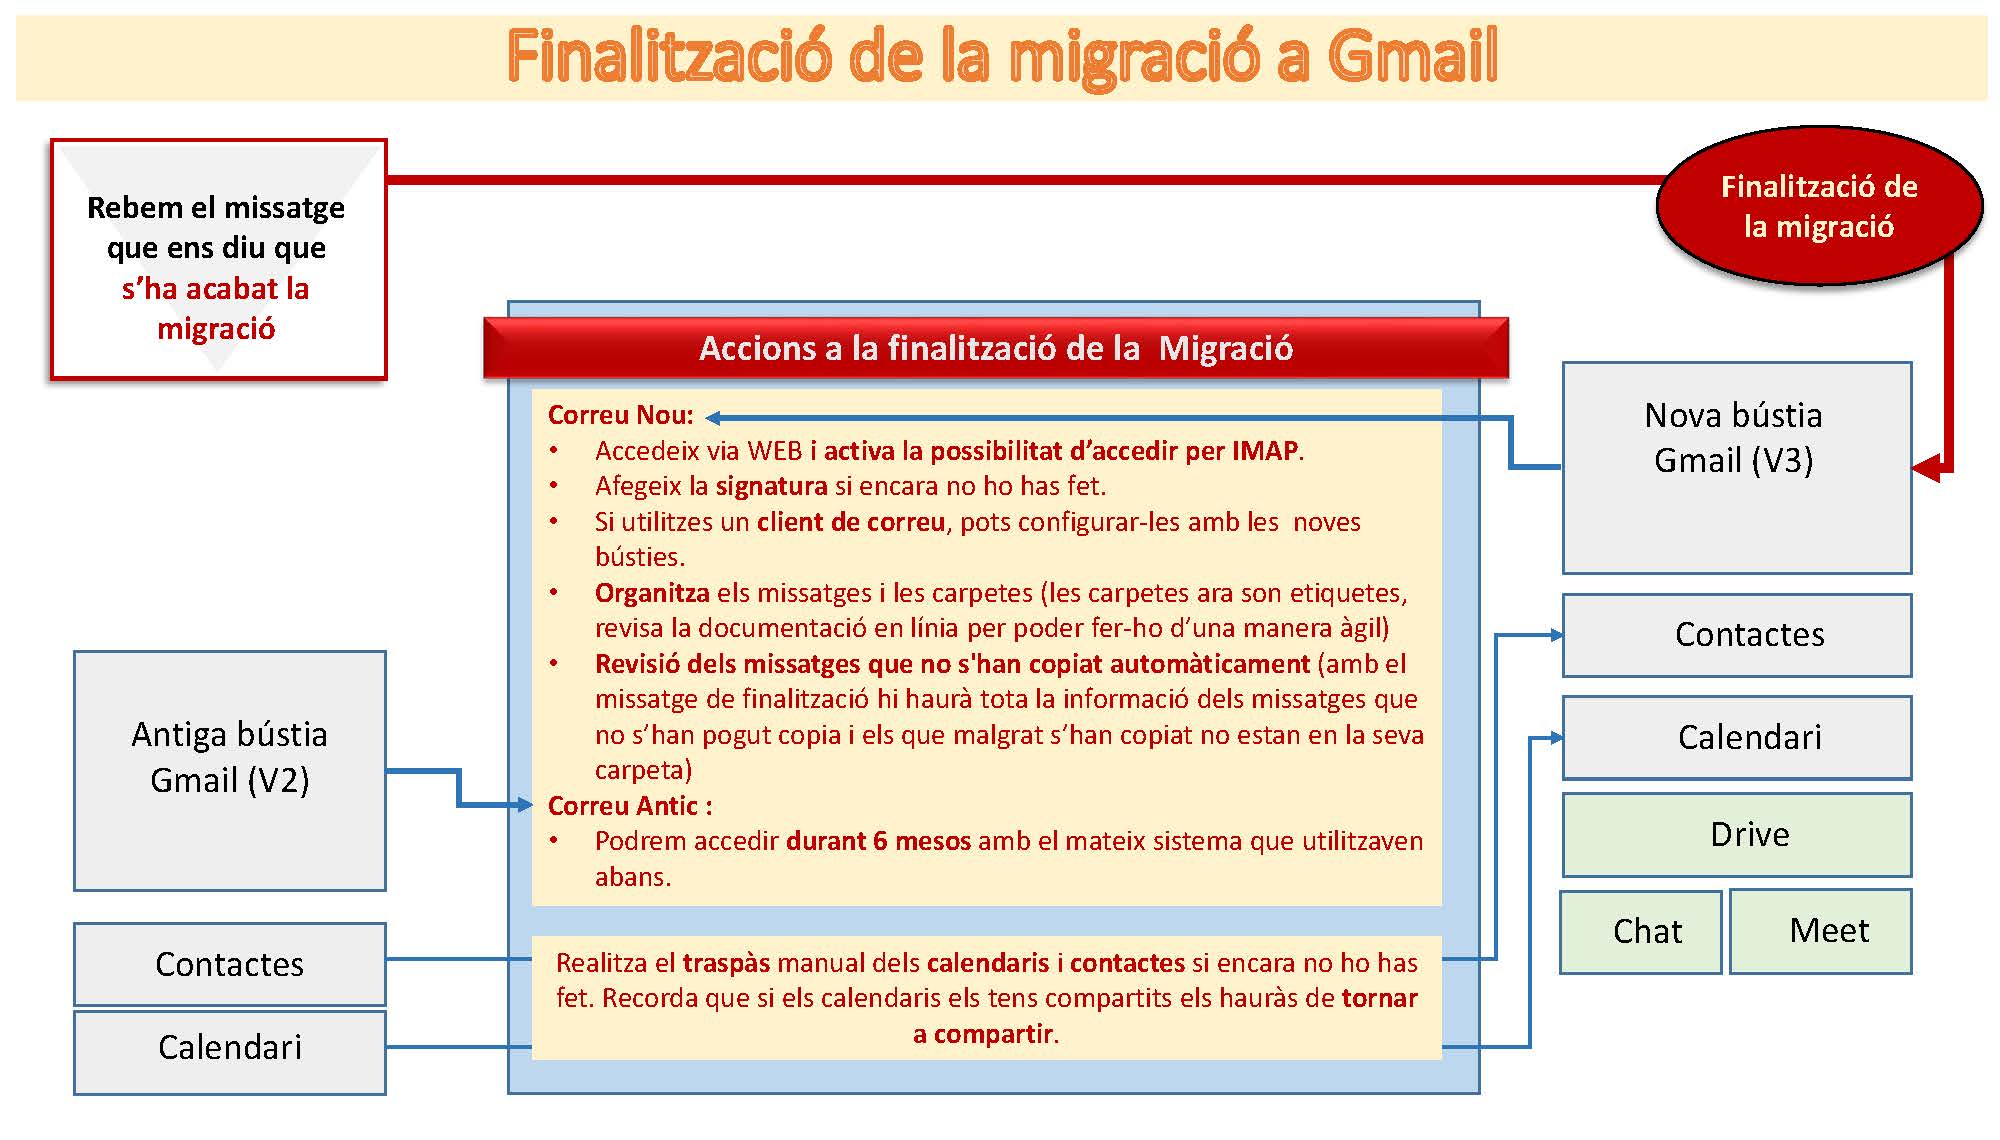 MigracioV3_Finalitzacio